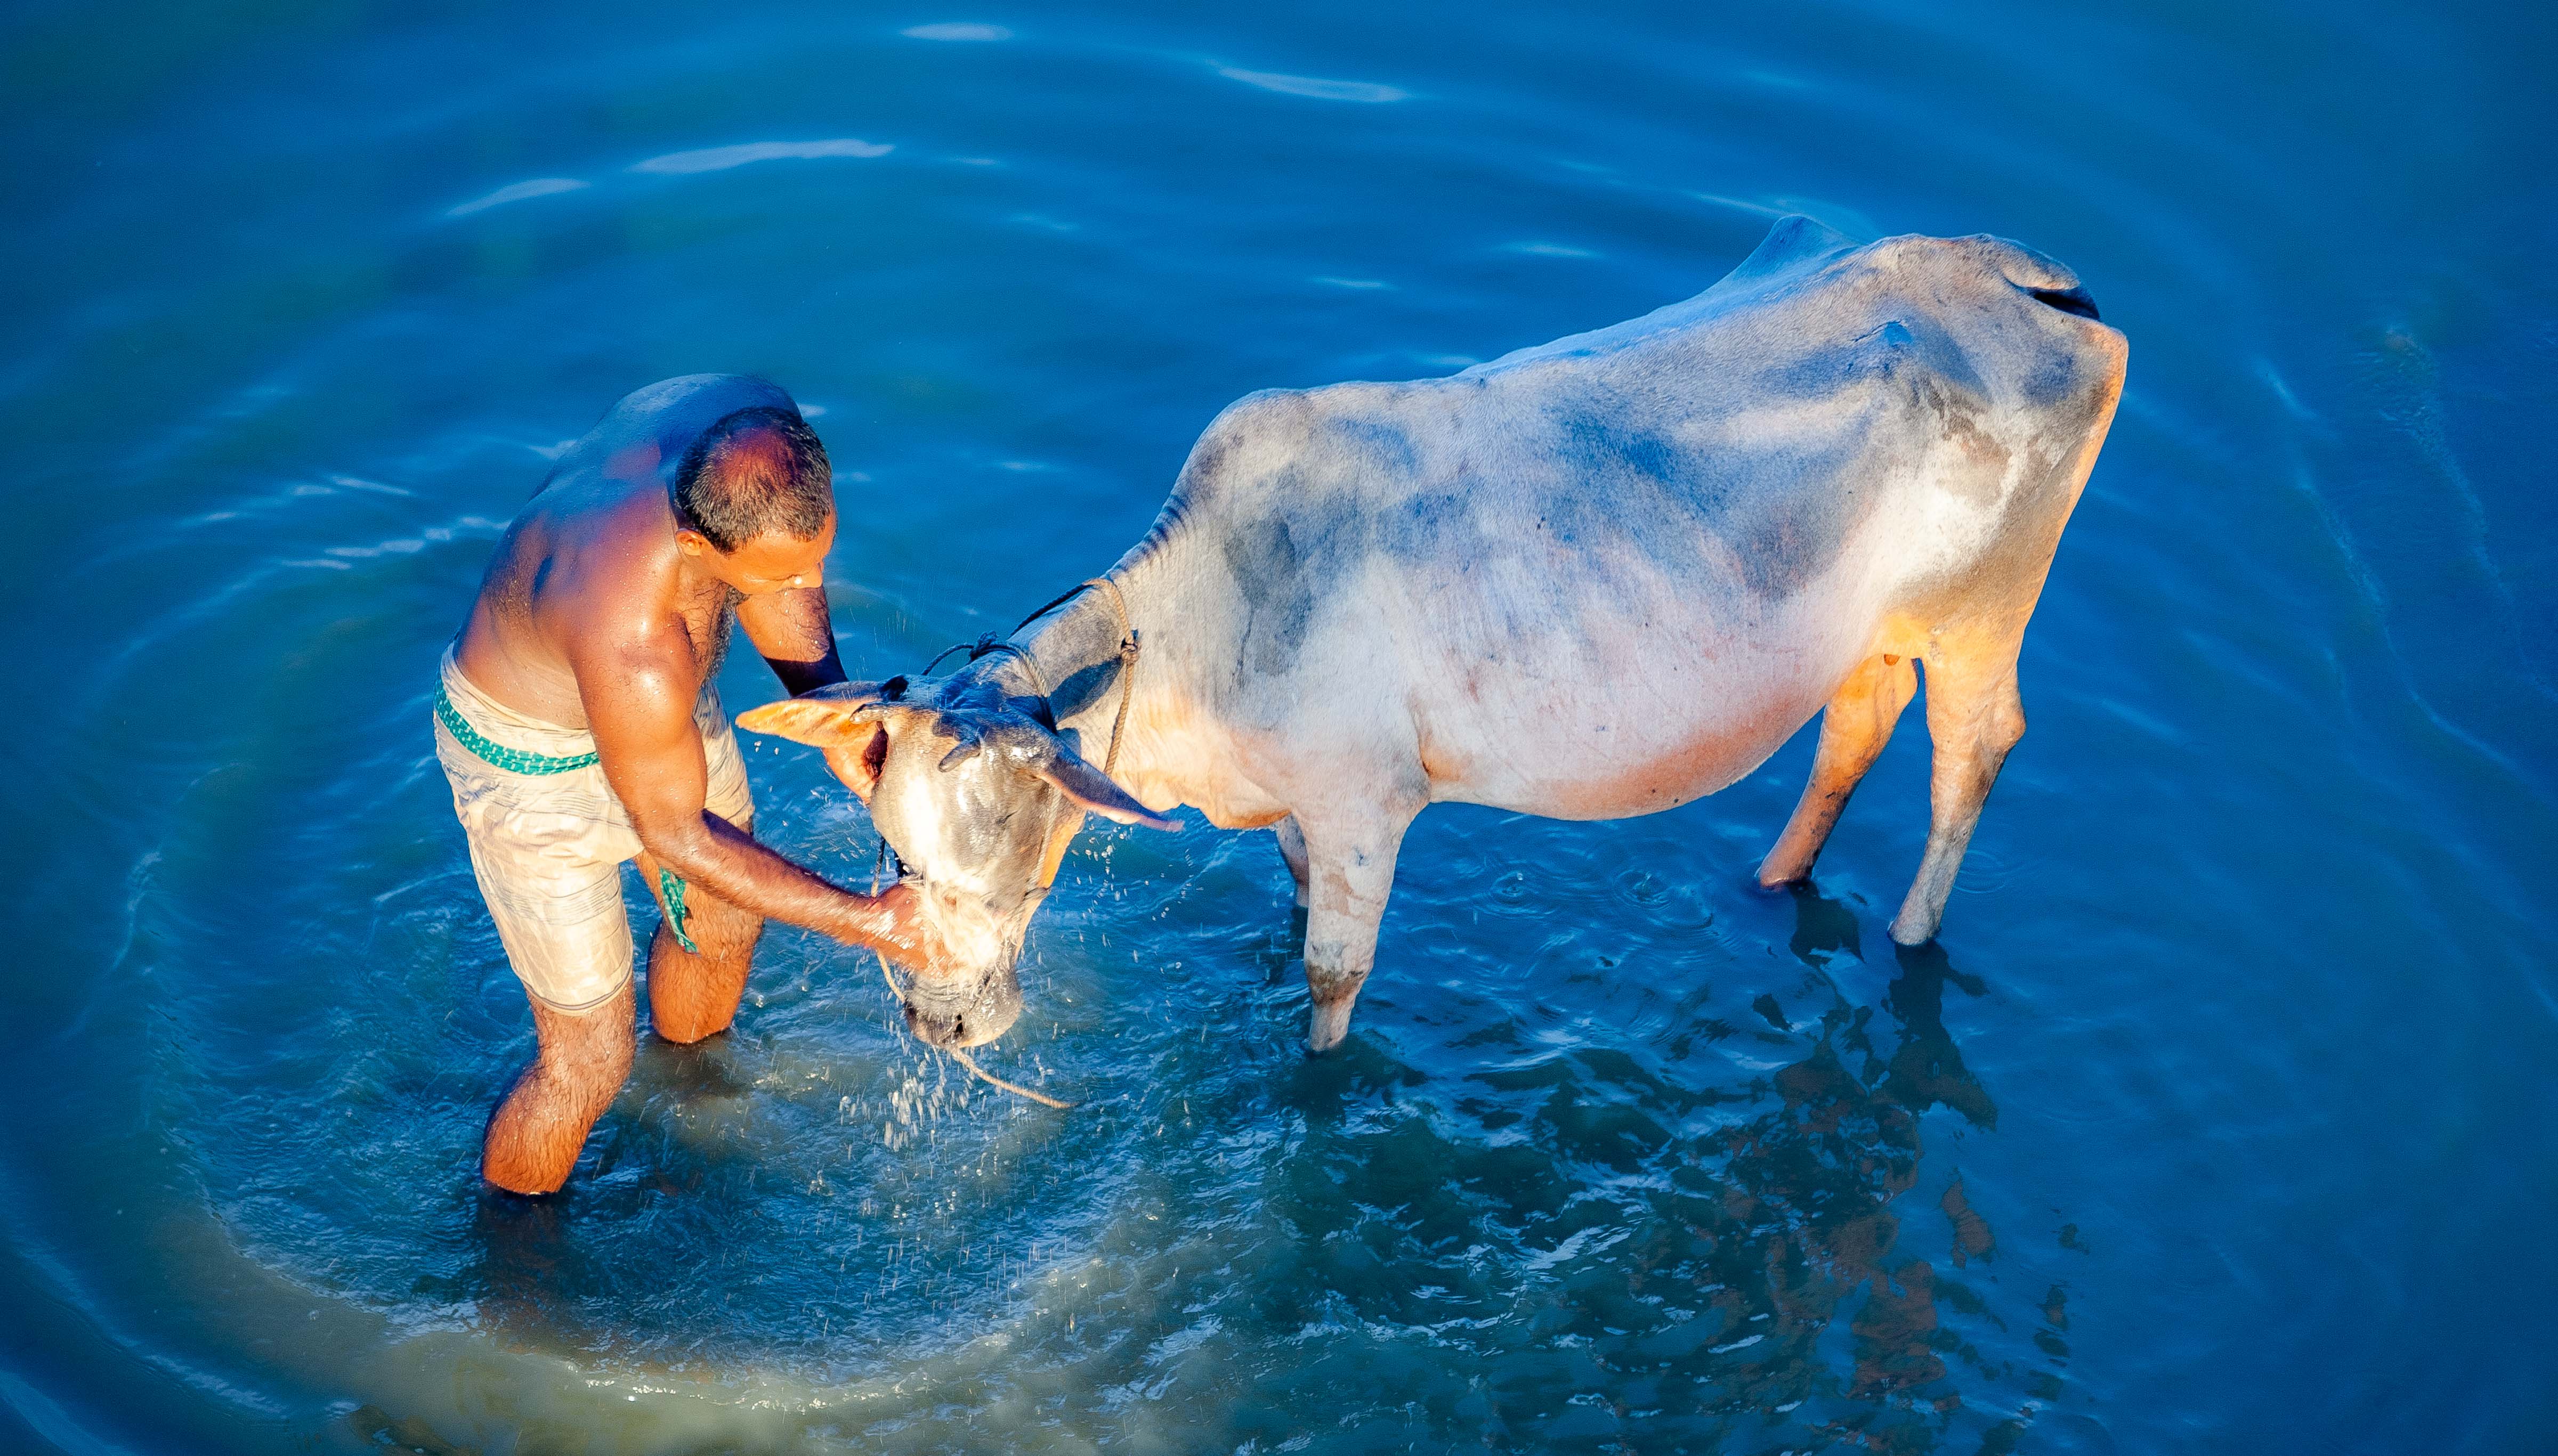 Bangladesh, Jamalpur Prov, Oxen Bath, 2009, IMG 8898